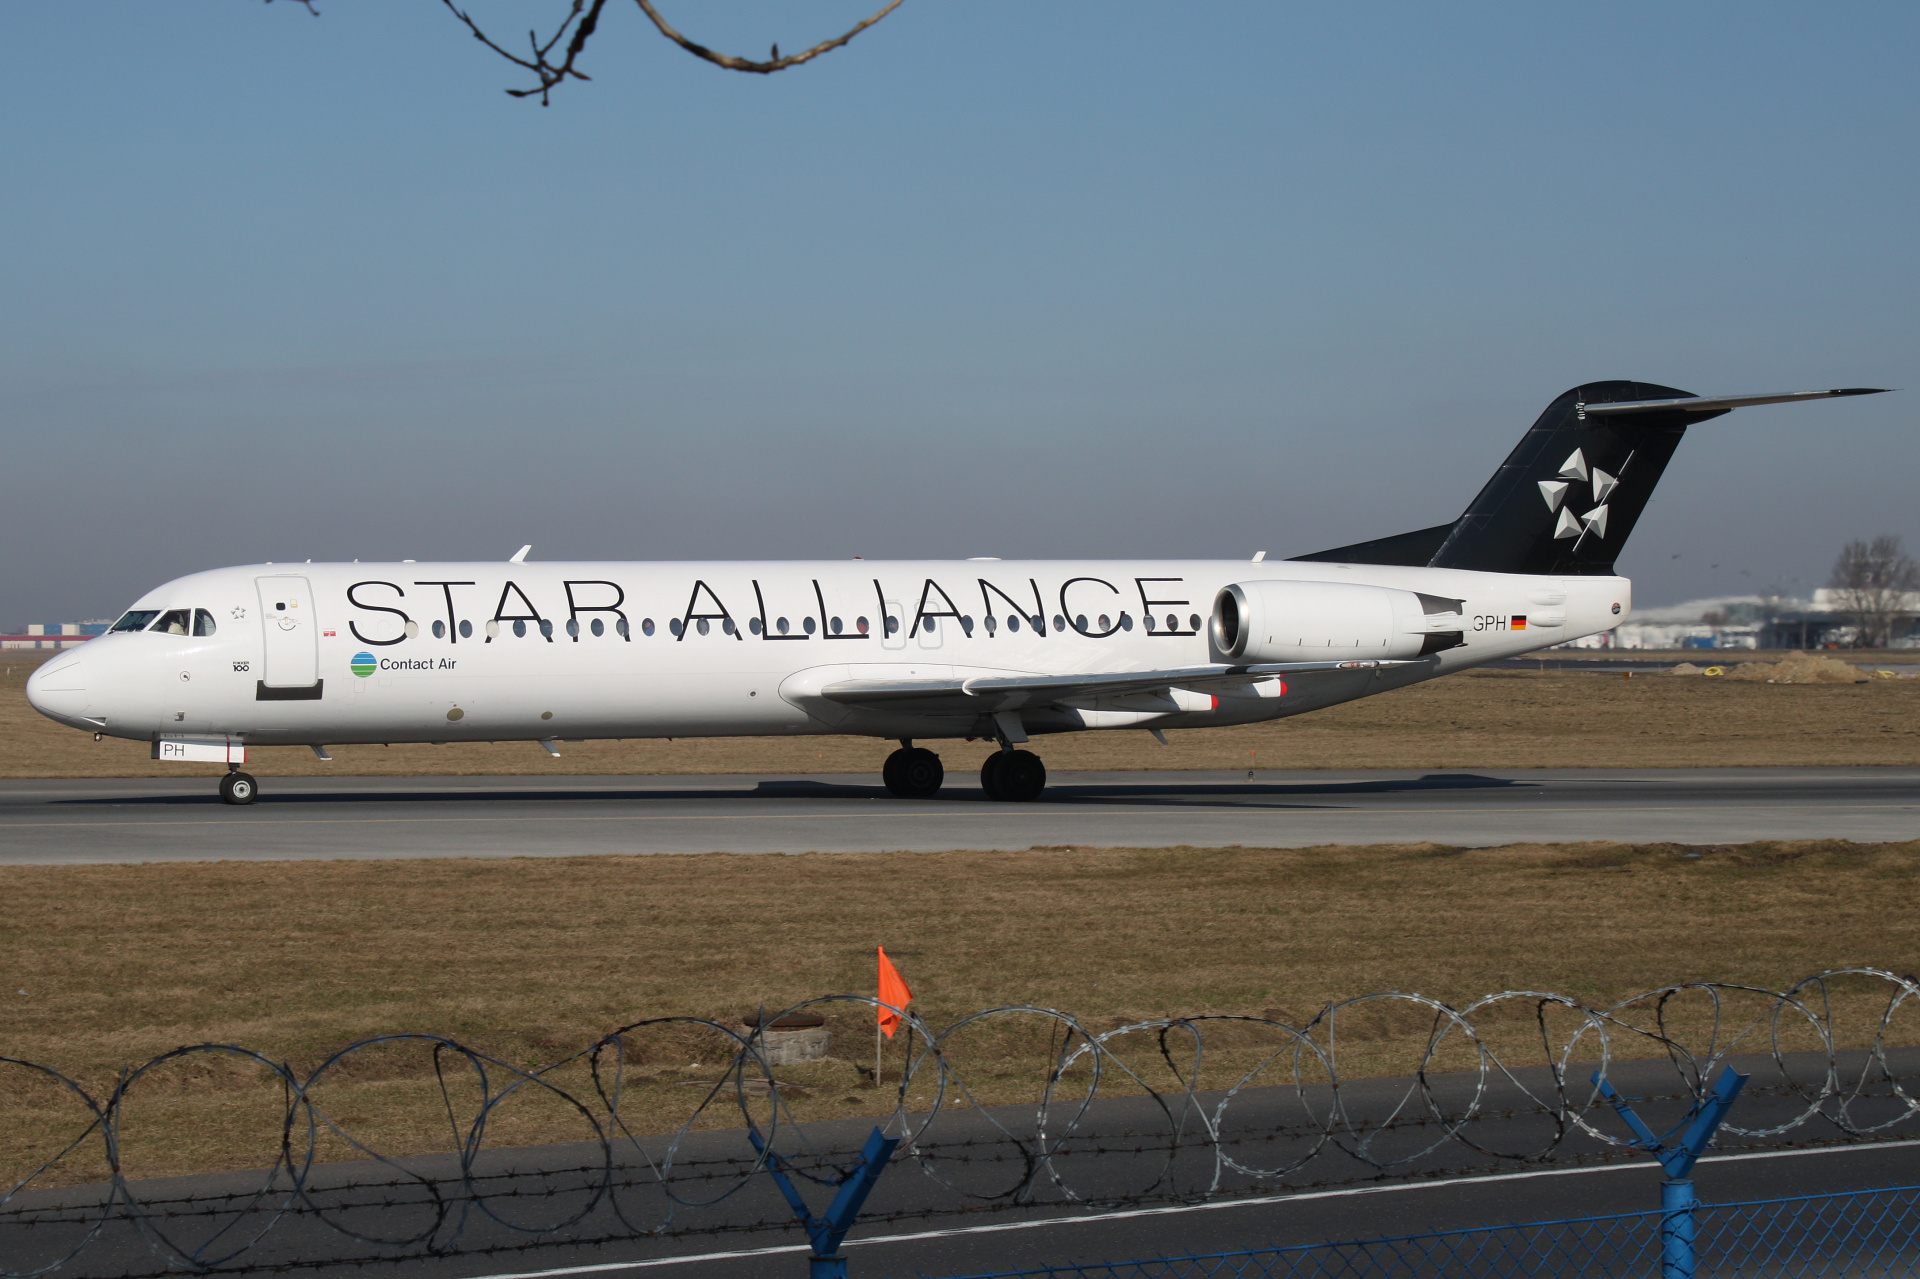 D-AGPH (malowanie Star Alliance) (Samoloty » Spotting na EPWA » Fokker 100 » Contact Air)